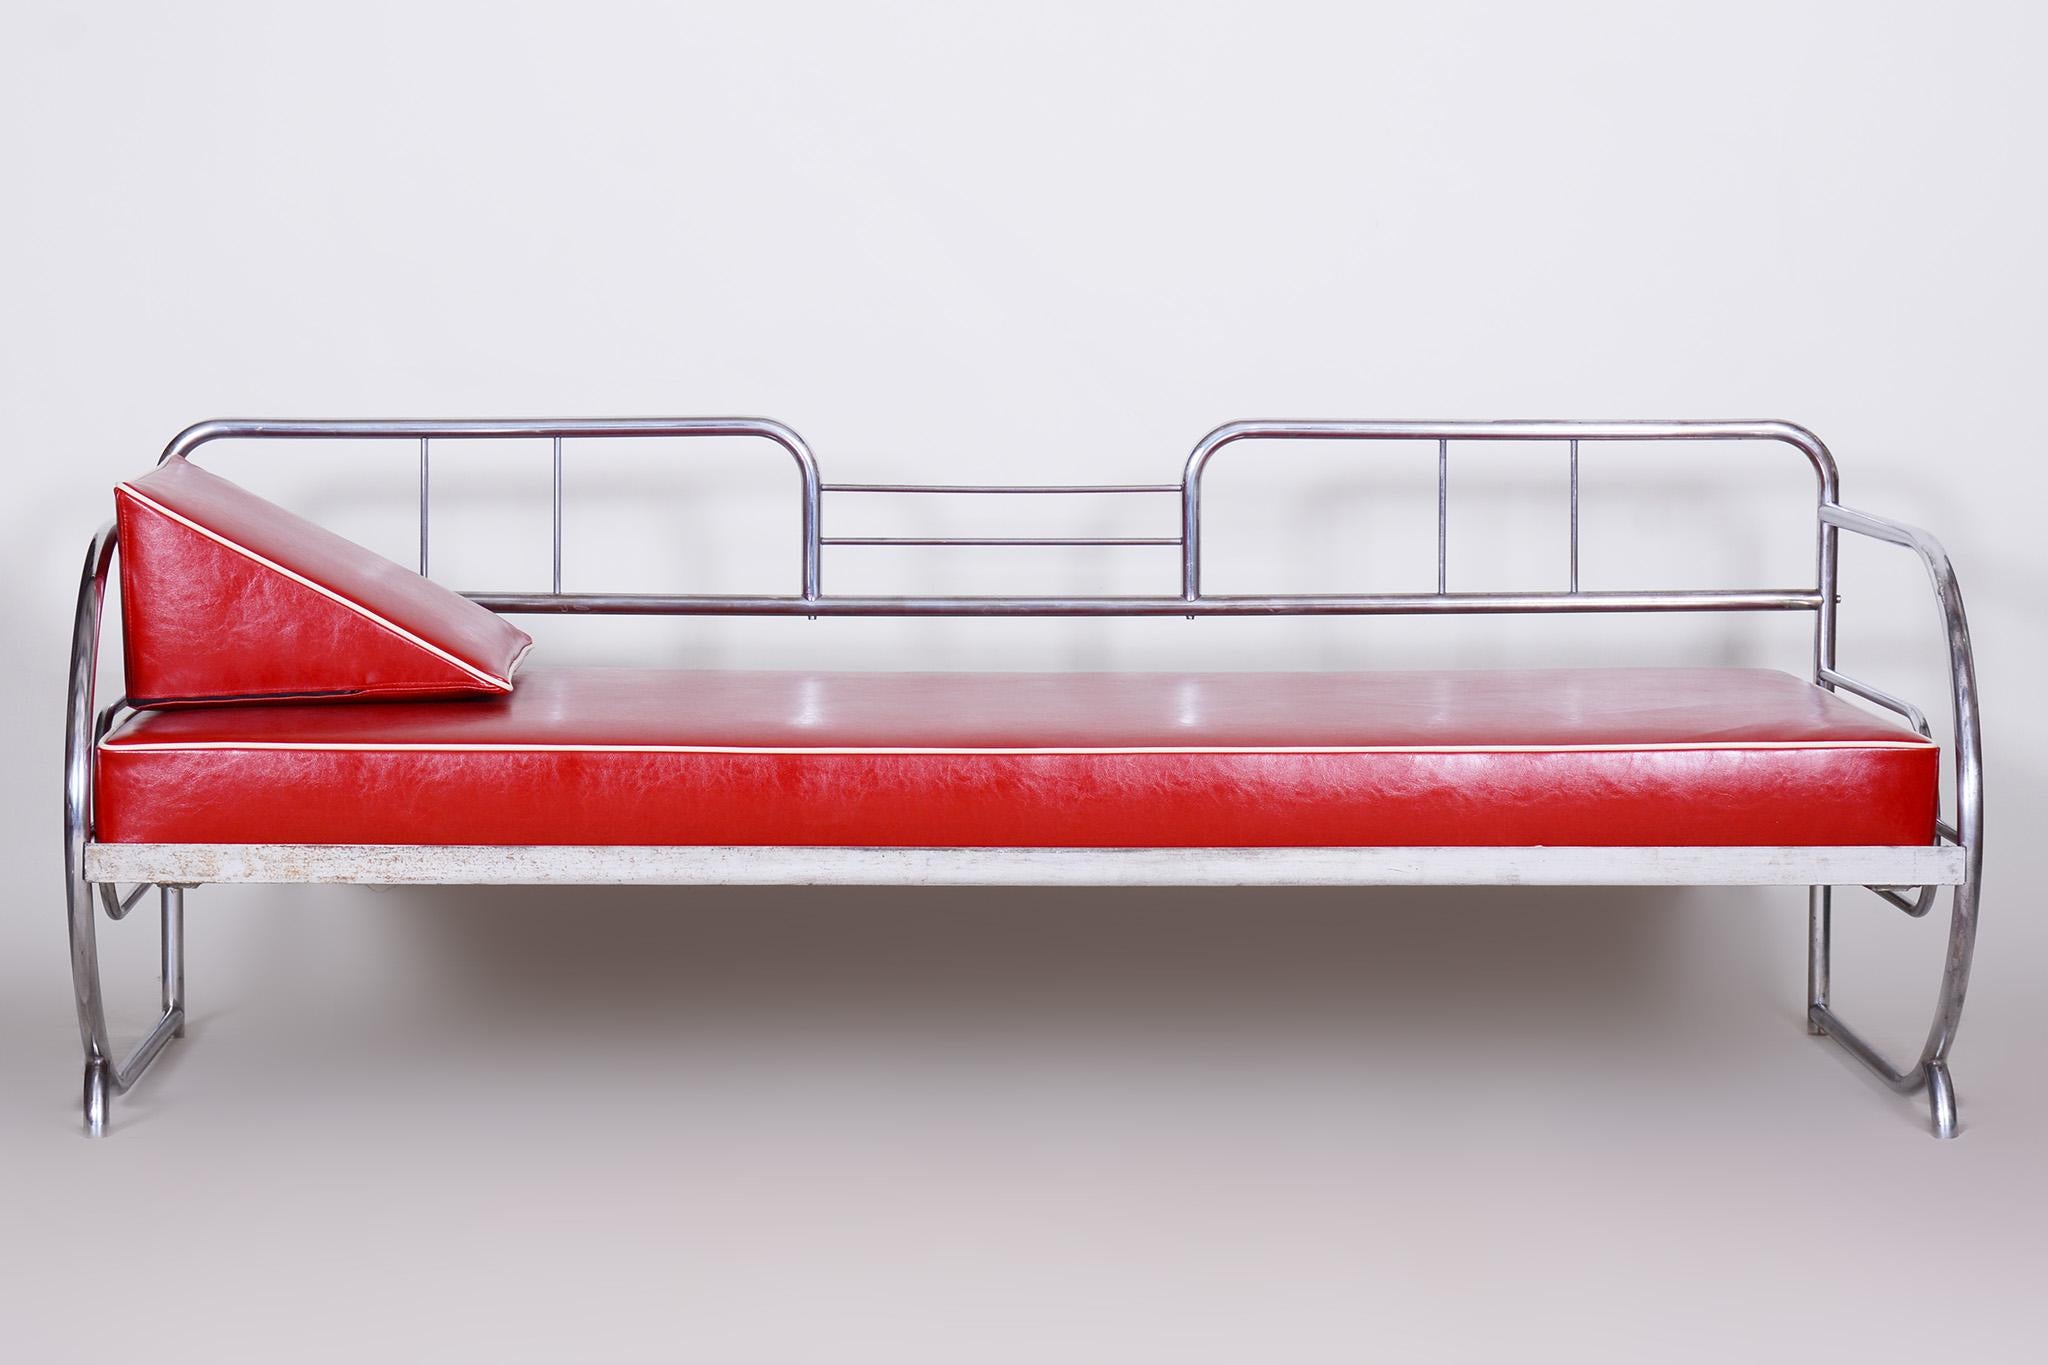 Fully Restored Bauhaus Sofa with Chrome Tubular Steel Frame by Robert Slezak.

Maker: Robert Slezak
Source: Czechia (Czechoslovakia)
Period: 1930-1939
Material: High-Quality Leather, Tubular Chrome Plated Steel
Colors: Red, White